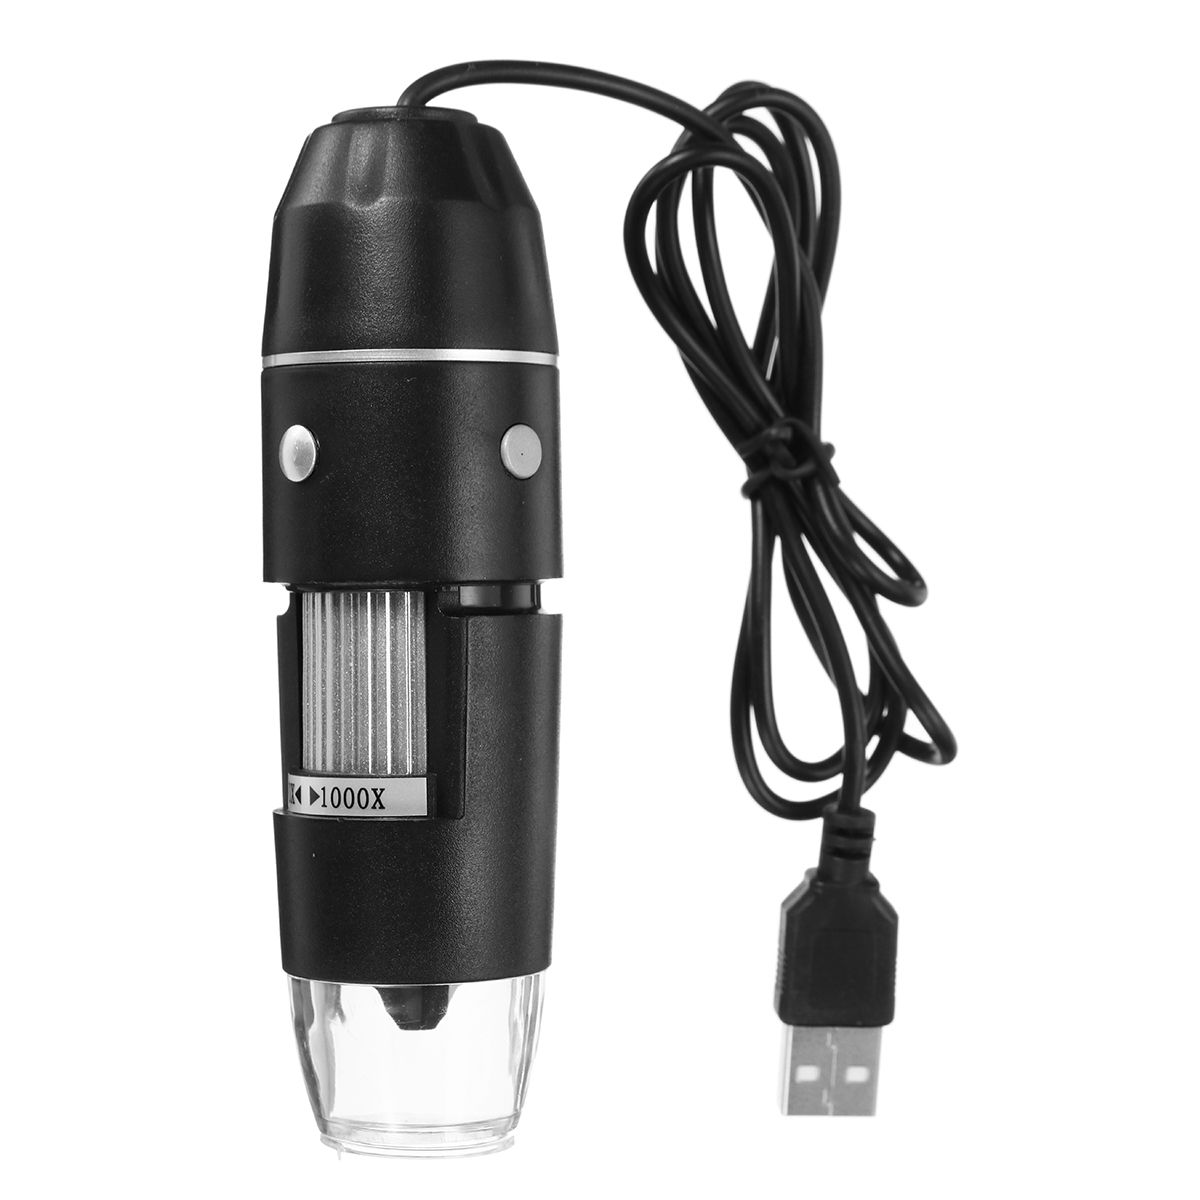 1000X-8LED-2MP-USB-Zoom-Microscope-Digital-Magnifier-HD-Endoscopic-Camera-Video-1602229